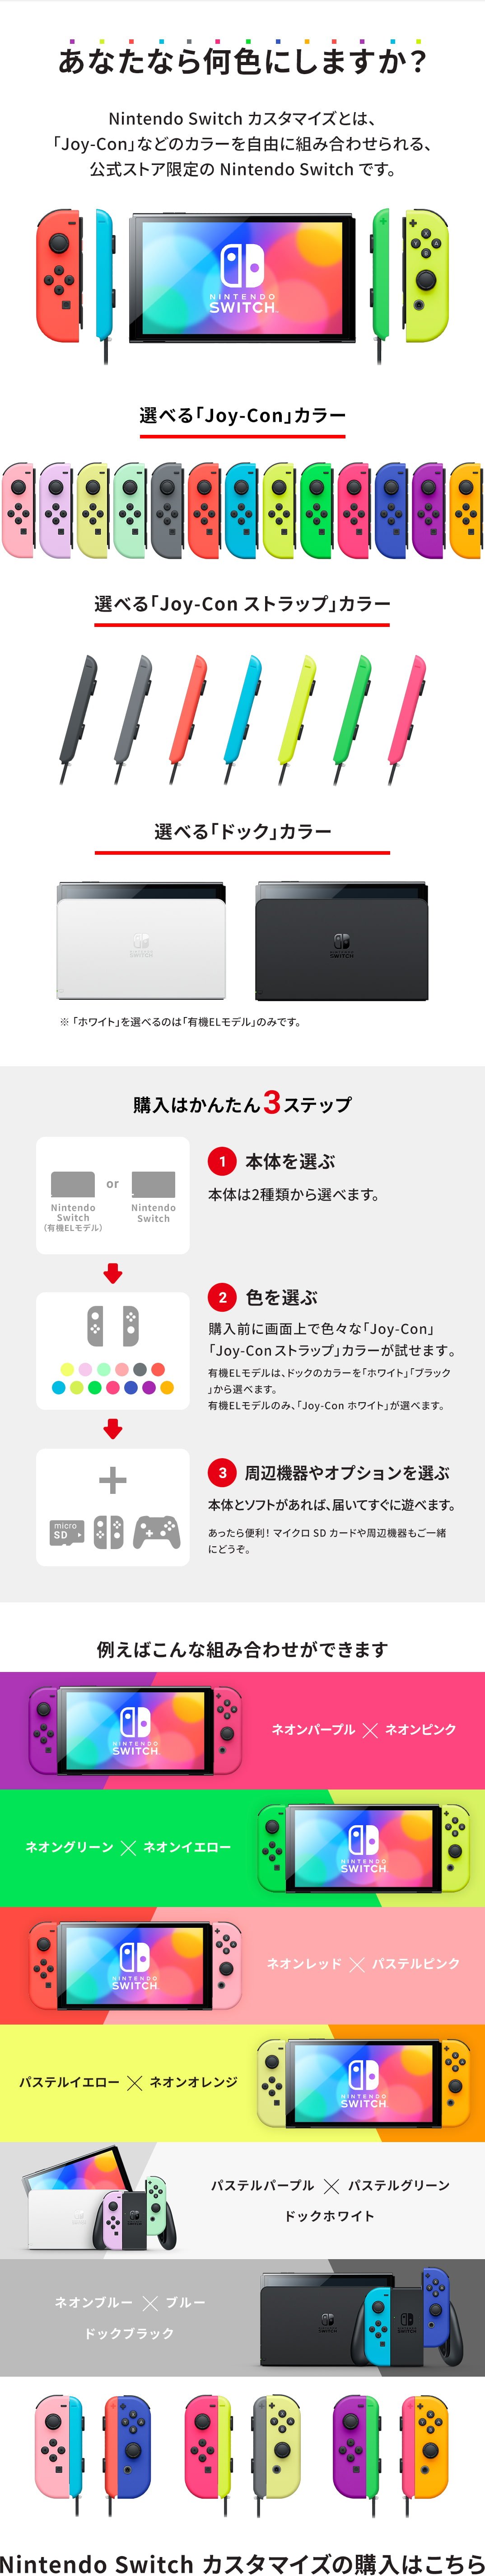 Nintendo Switch Customize 特集 | My Nintendo Store（マイ ...